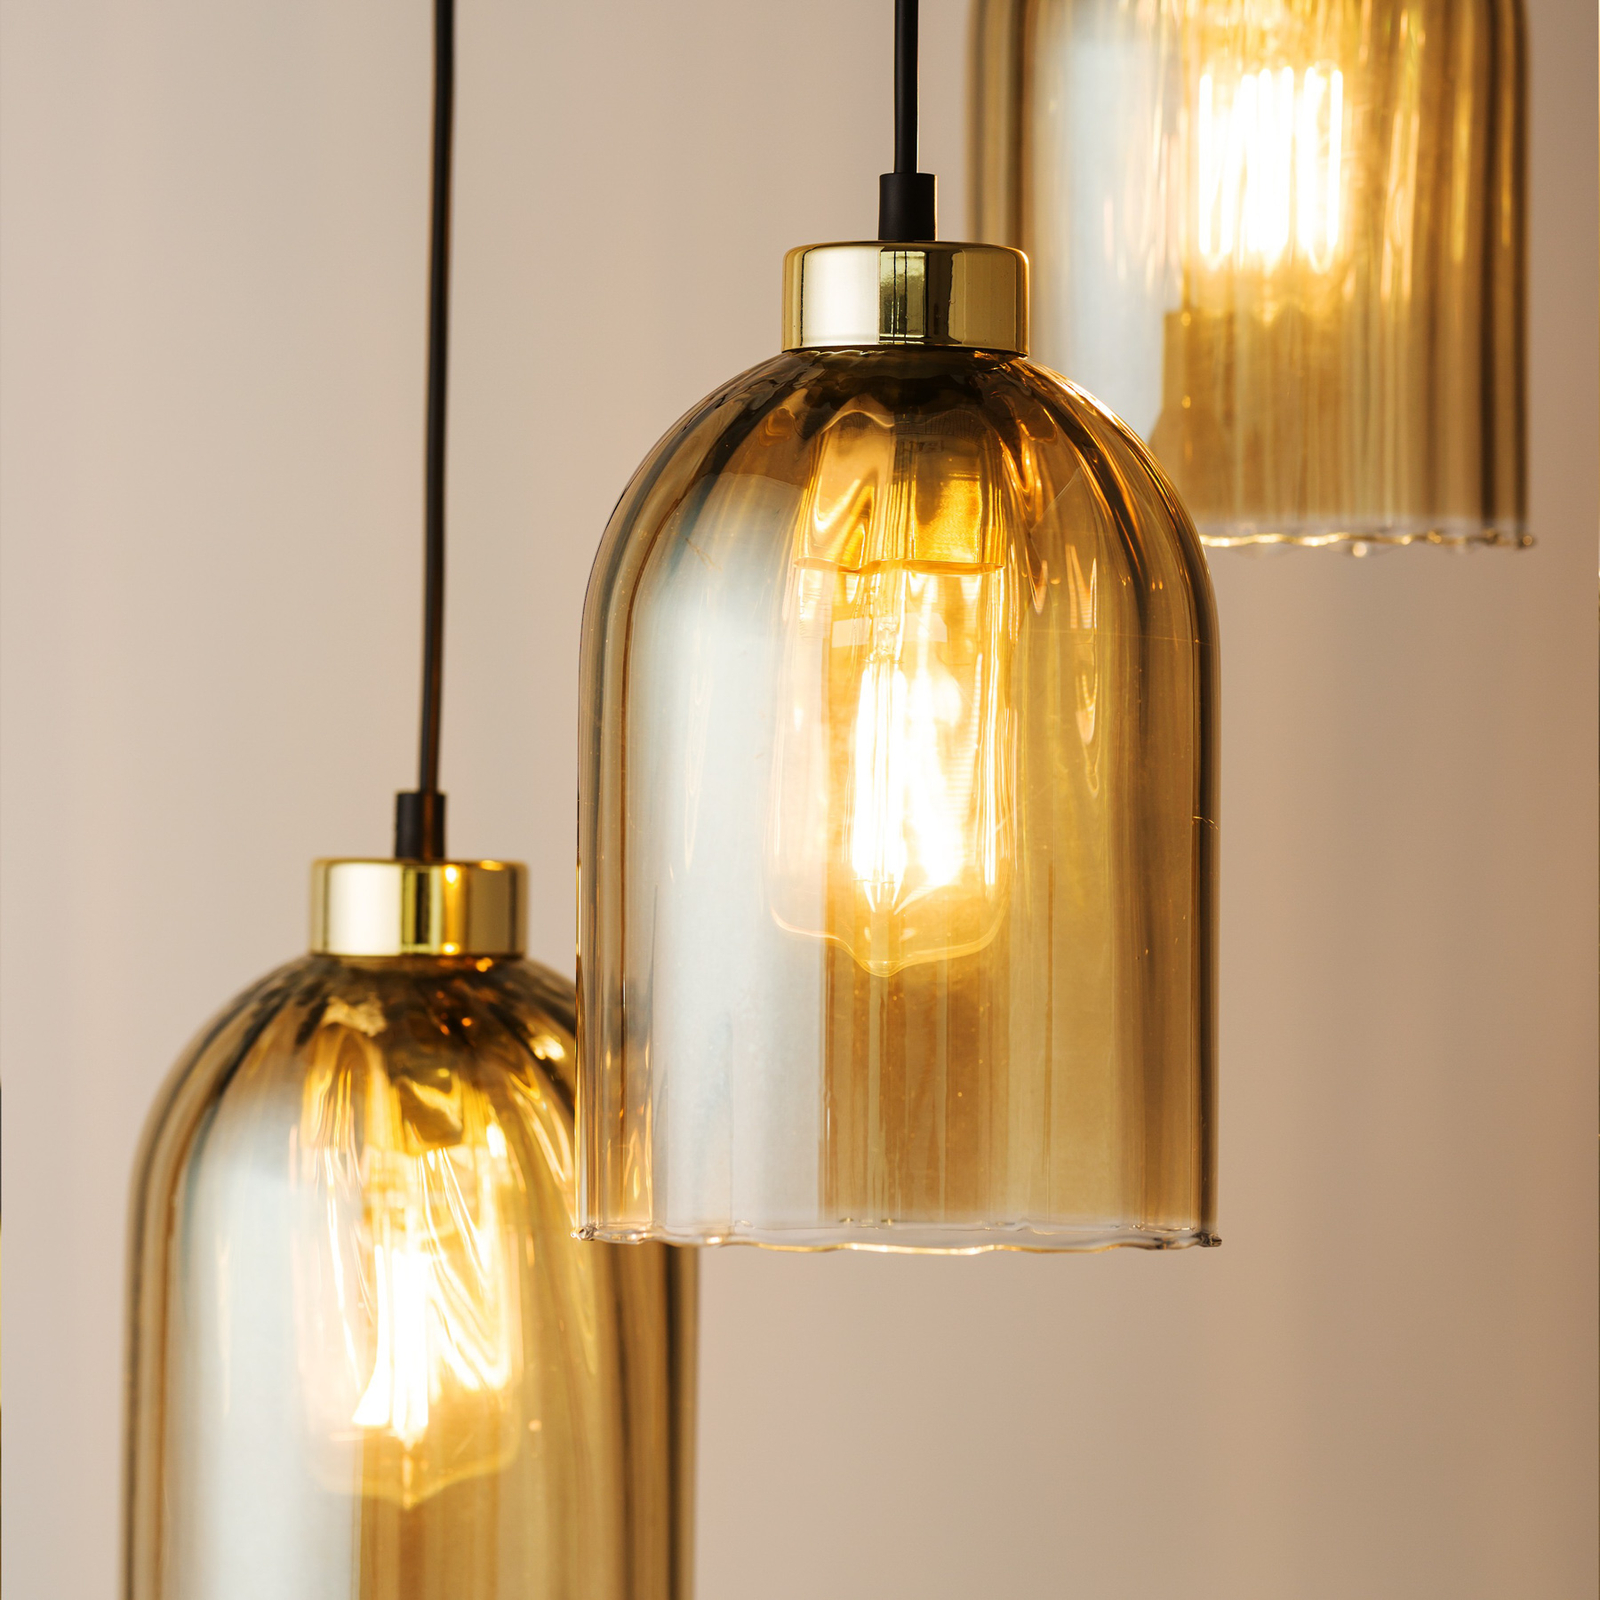 Glazen hanglamp Sapito, 3-lamps, amber